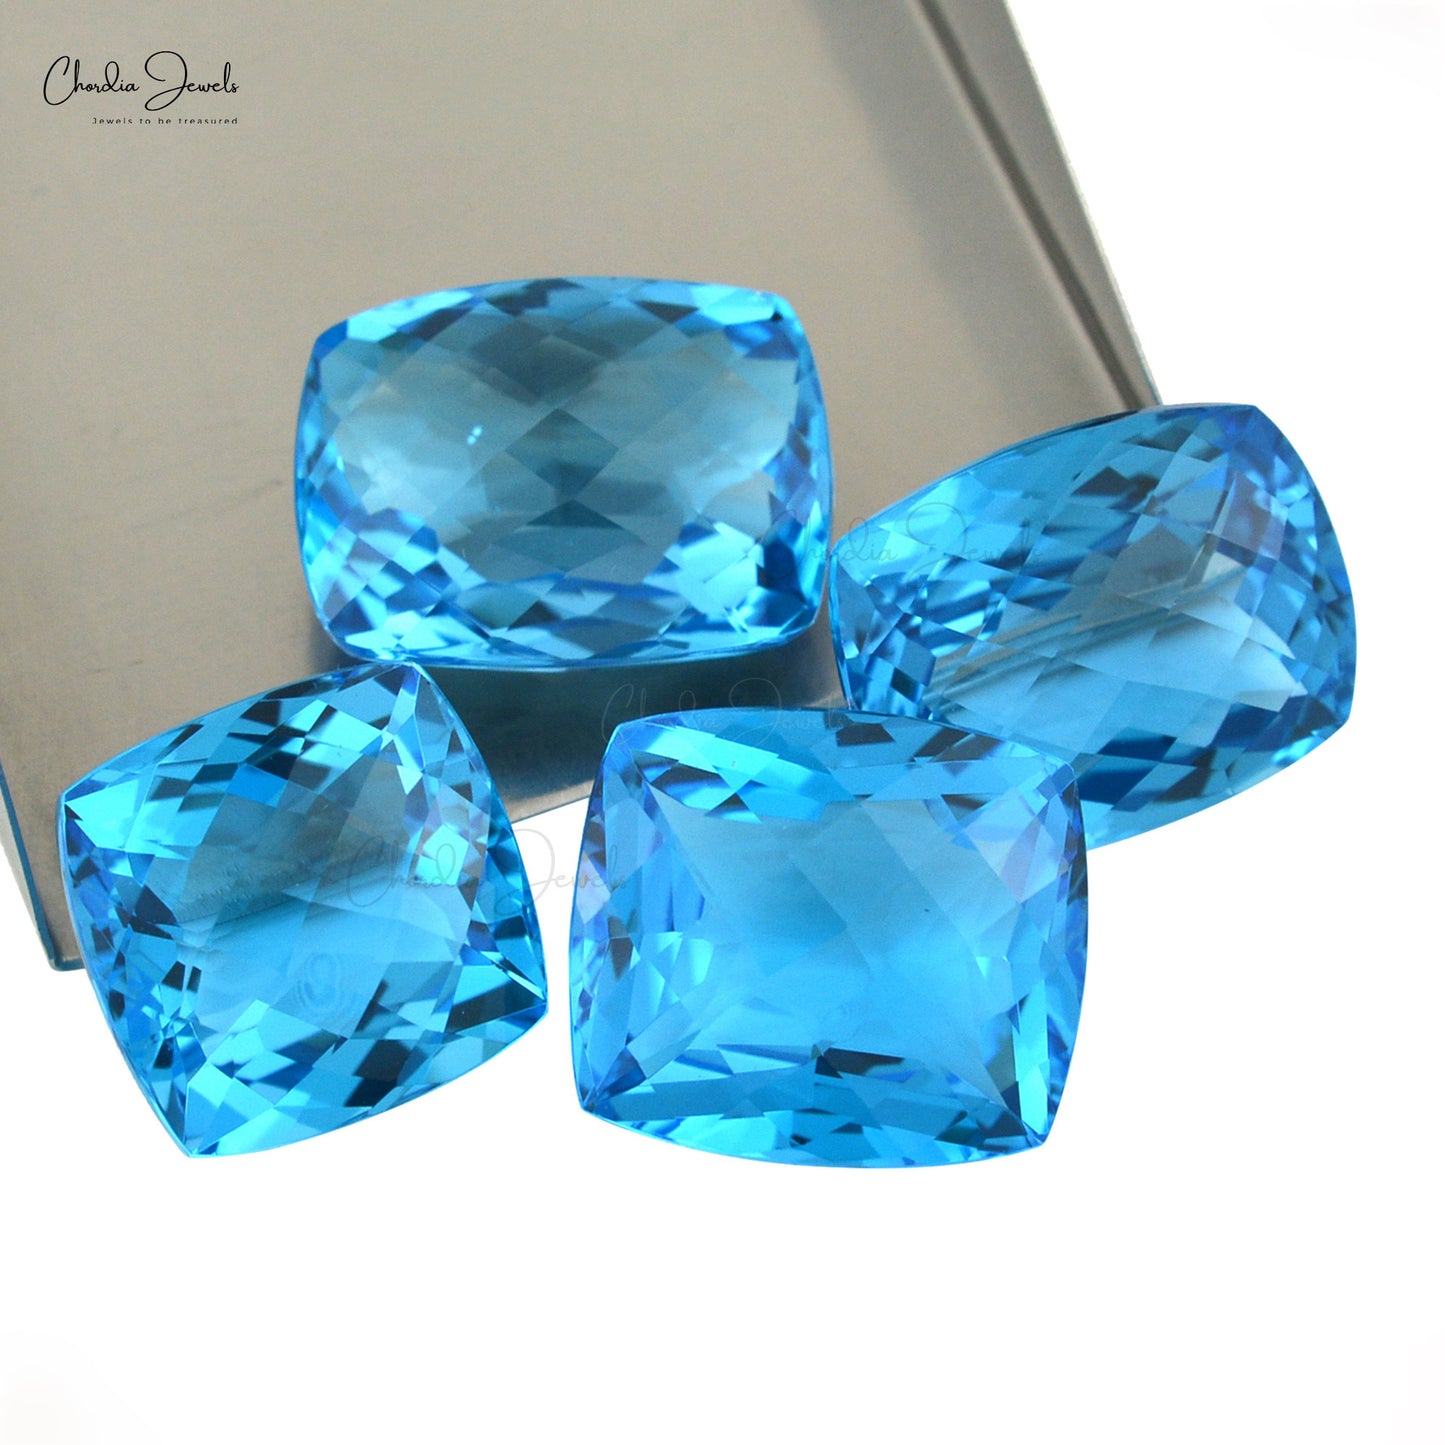 9mm Swiss Blue Topaz Faceted Cushion Loose Semi Precious Gemstone, 1piece